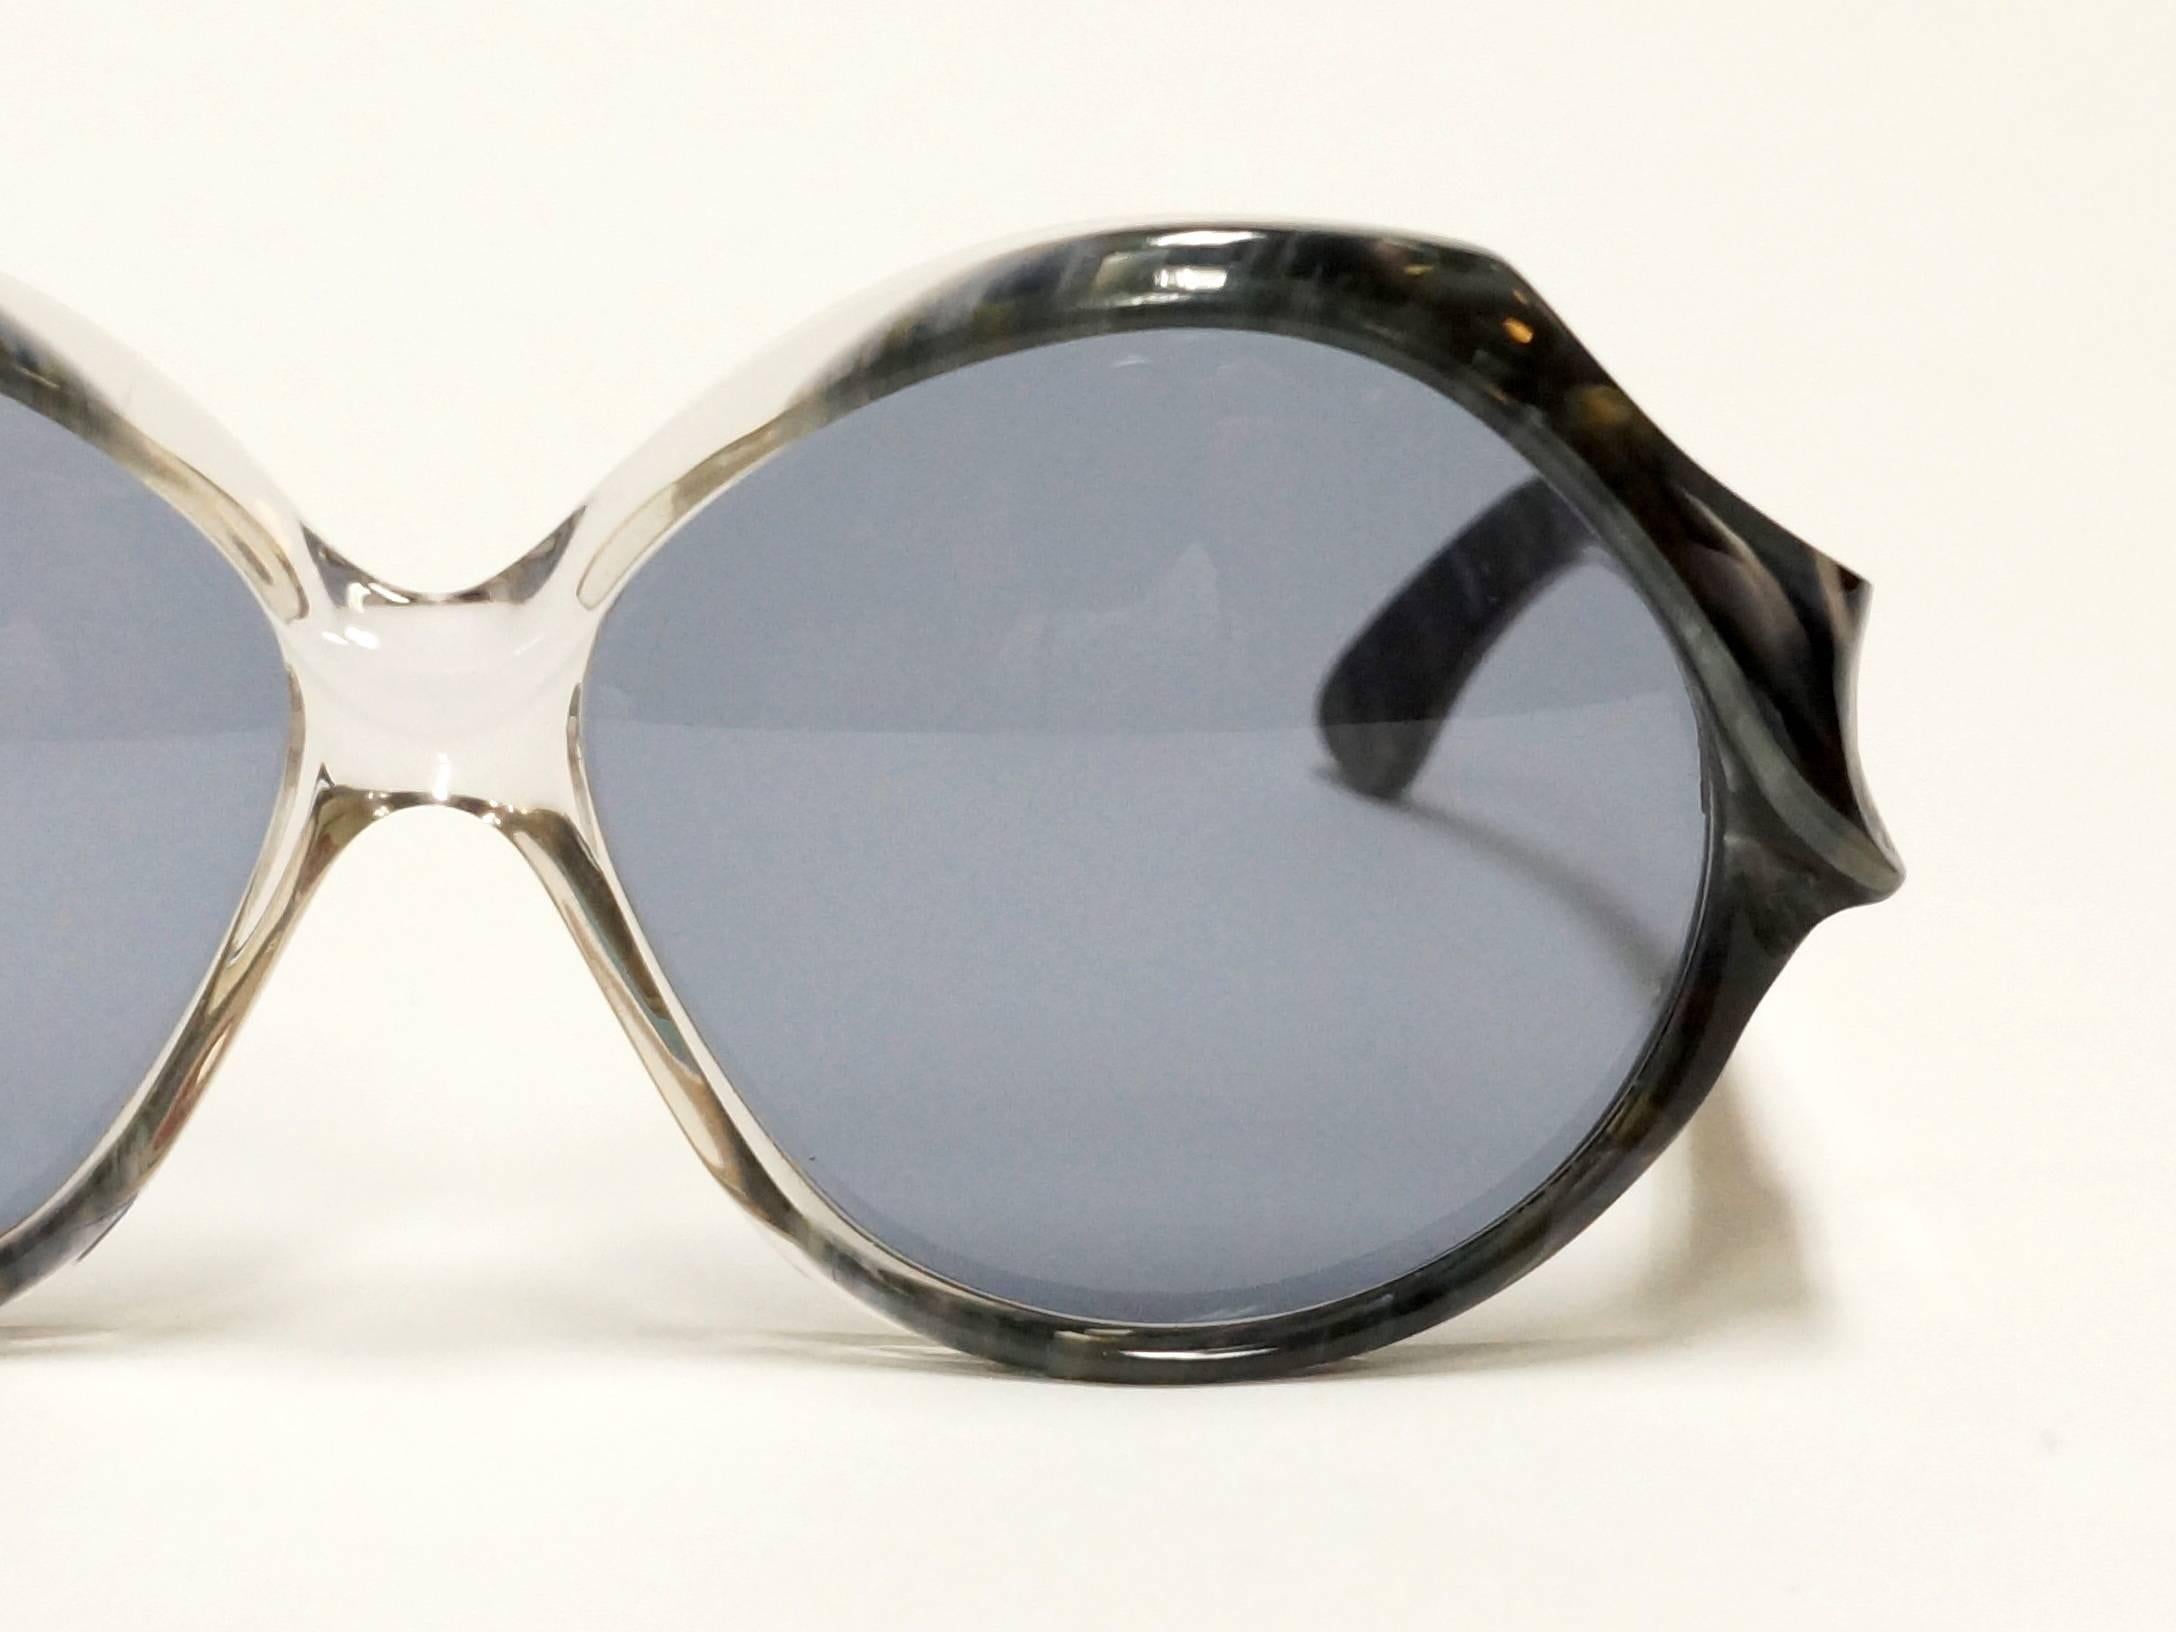 Women's 70s French Vintage Sunglasses by Jacques Fath - model Esterel/7  For Sale